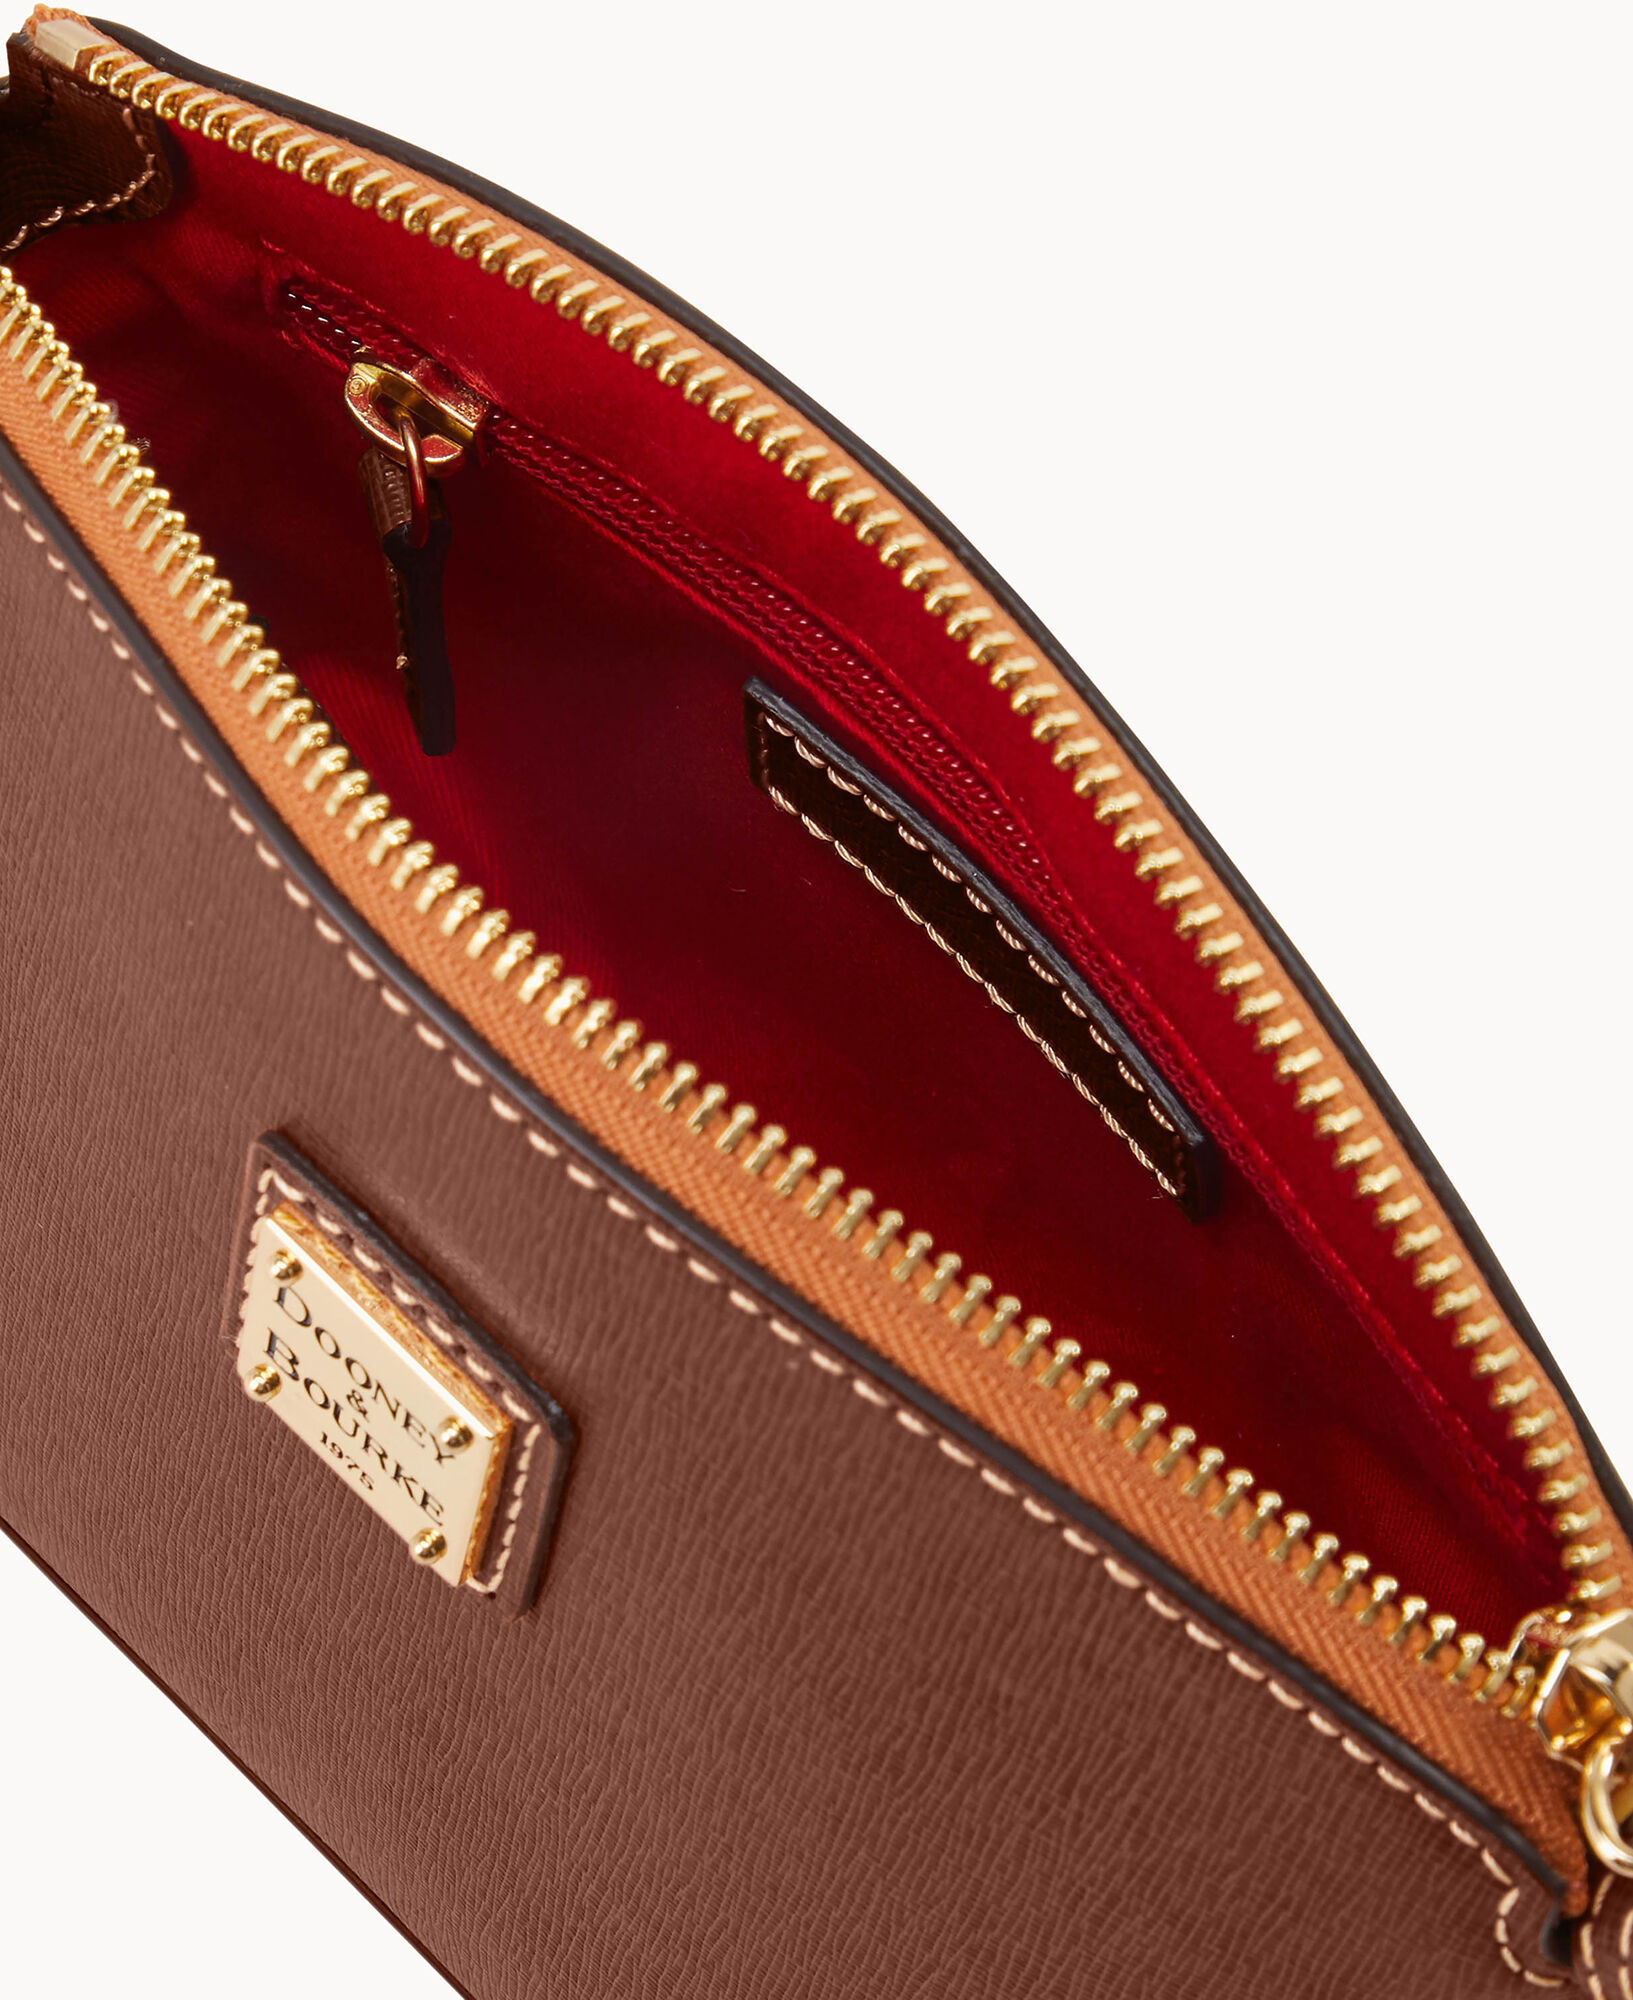 Dooney & Bourke Saffiano Small Zip Crossbody - ShopStyle Shoulder Bags